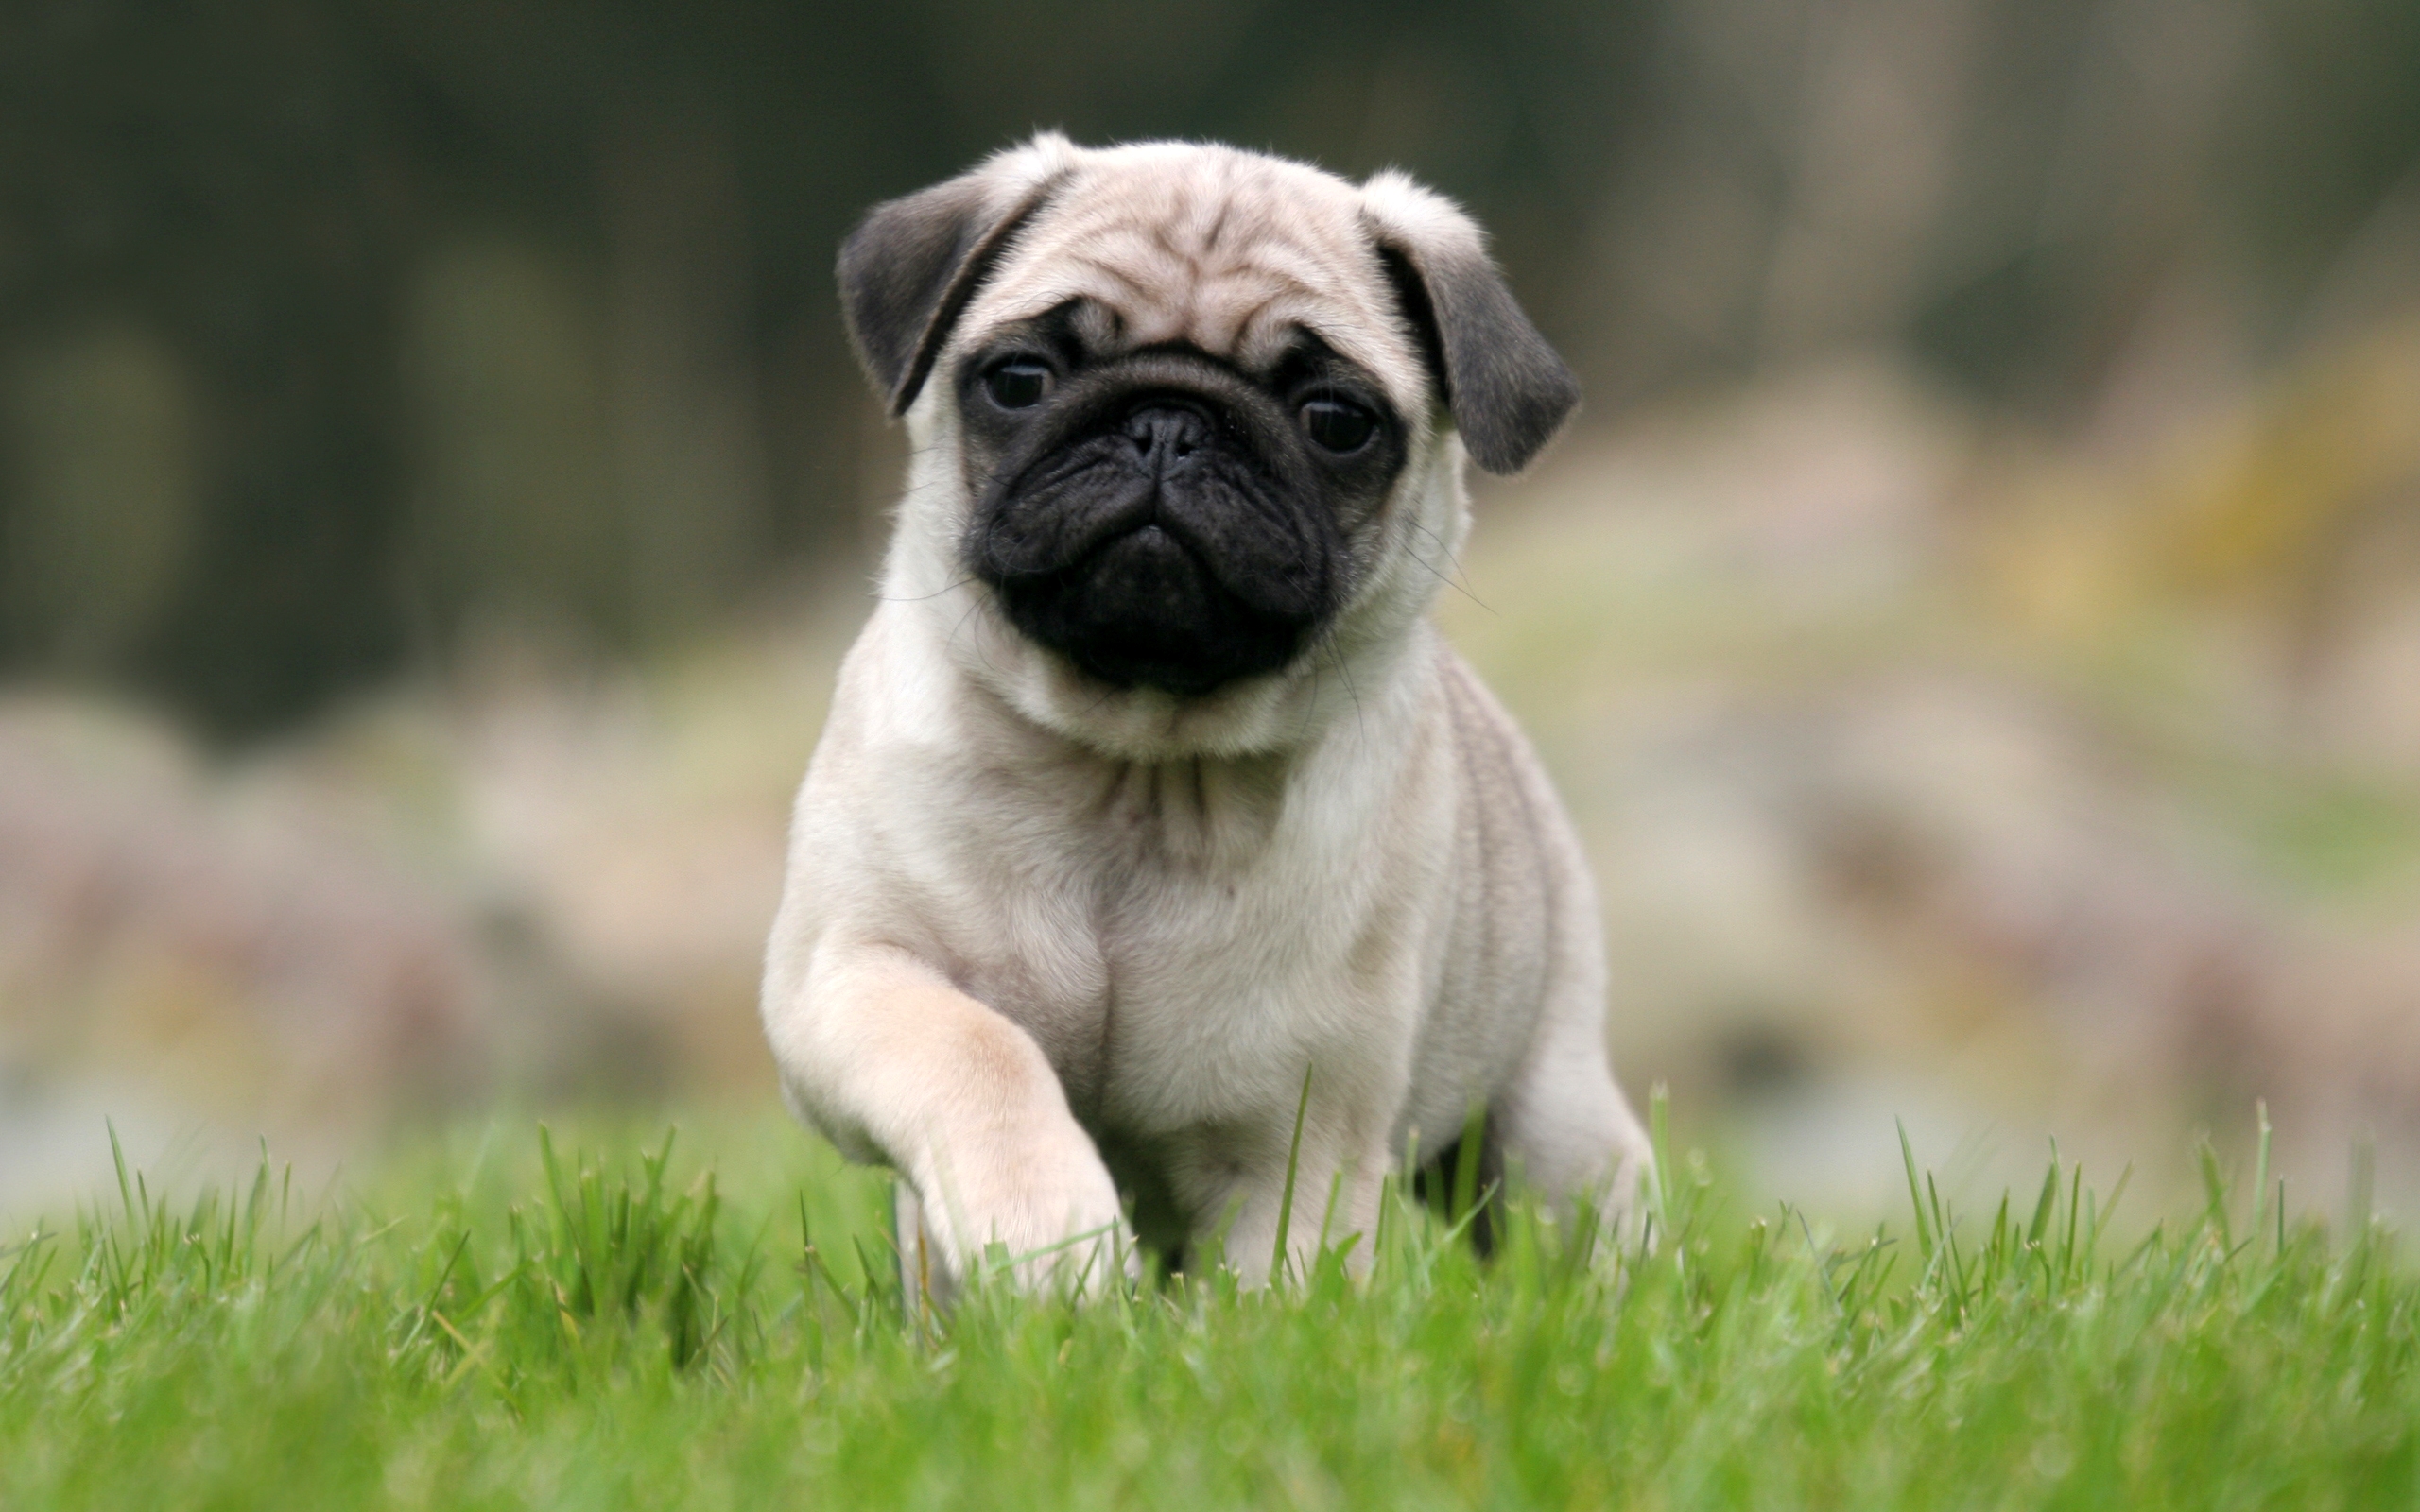 Pug Puppy Running On Grass